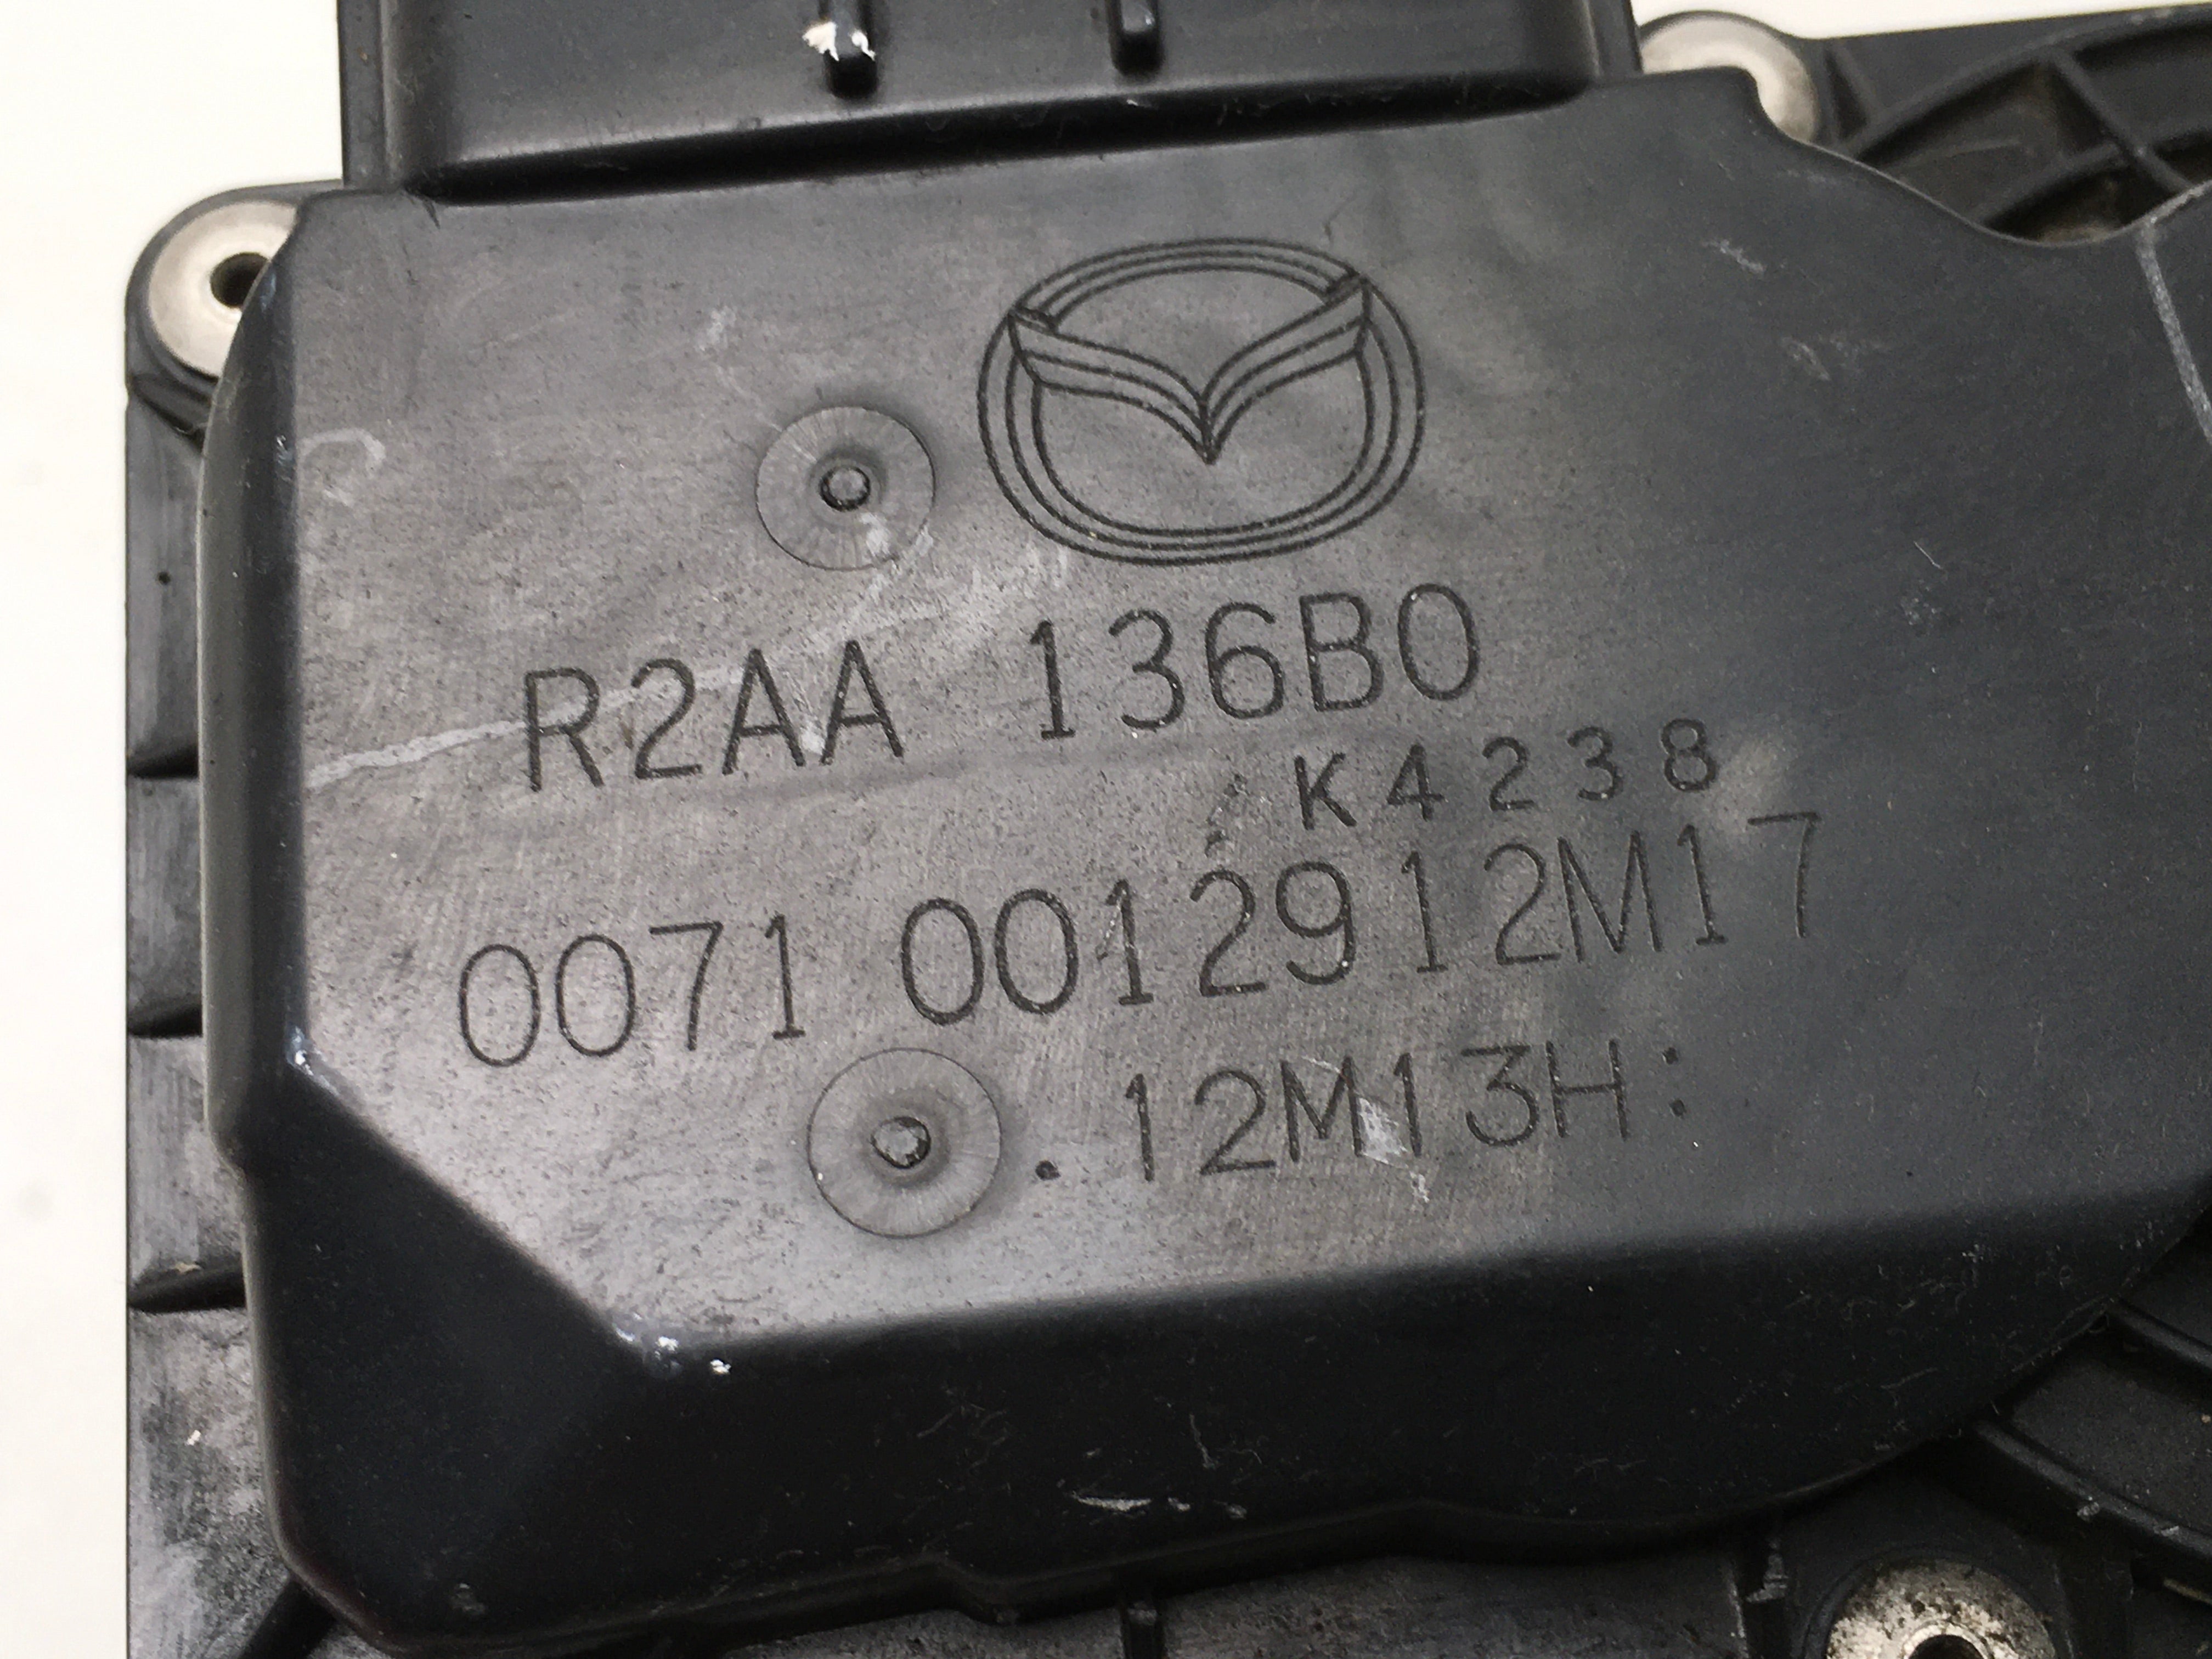 Caja mariposa Mazda R2AA136B0